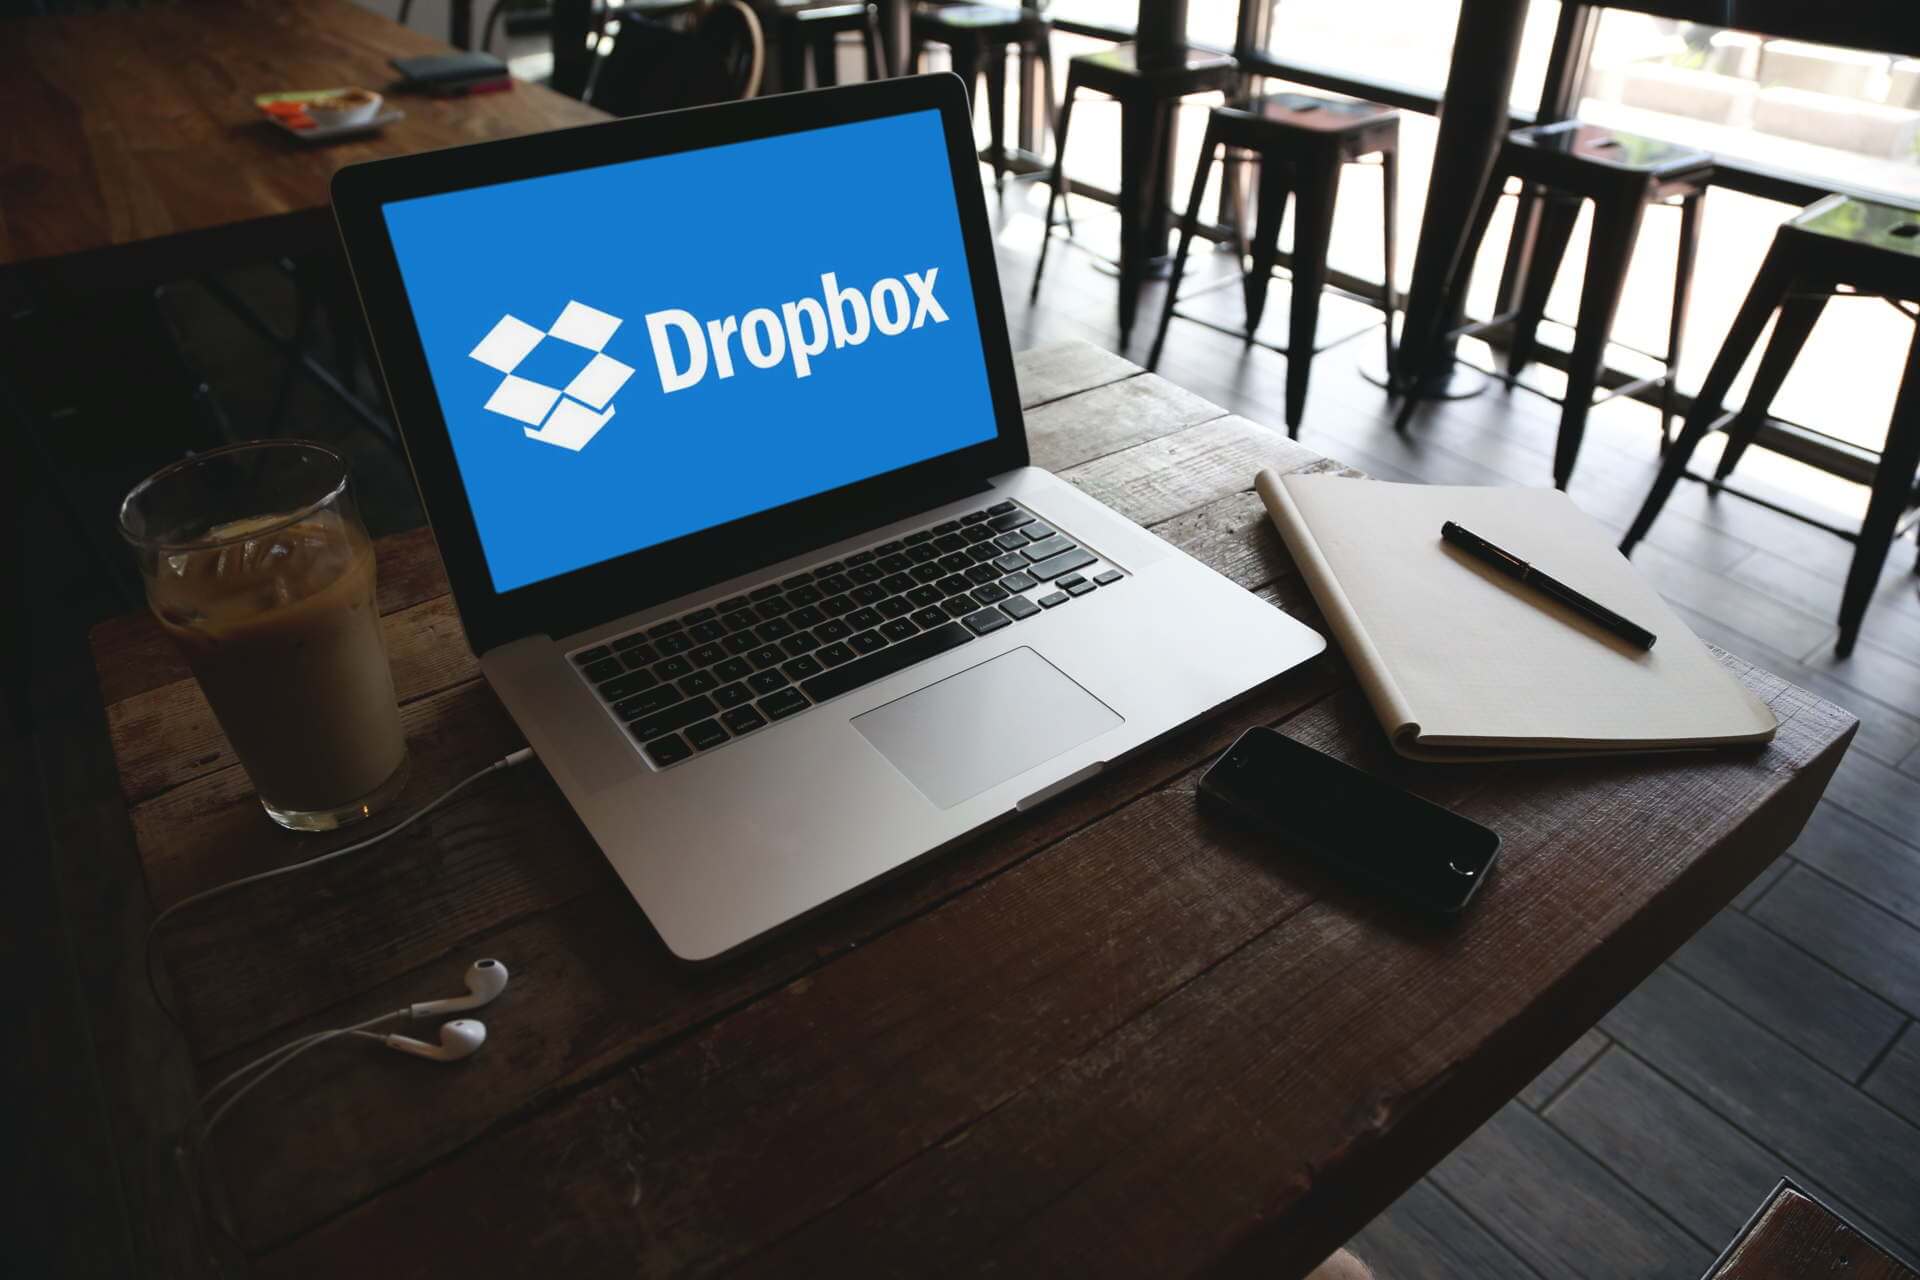 How to install Dropbox using the offline installer